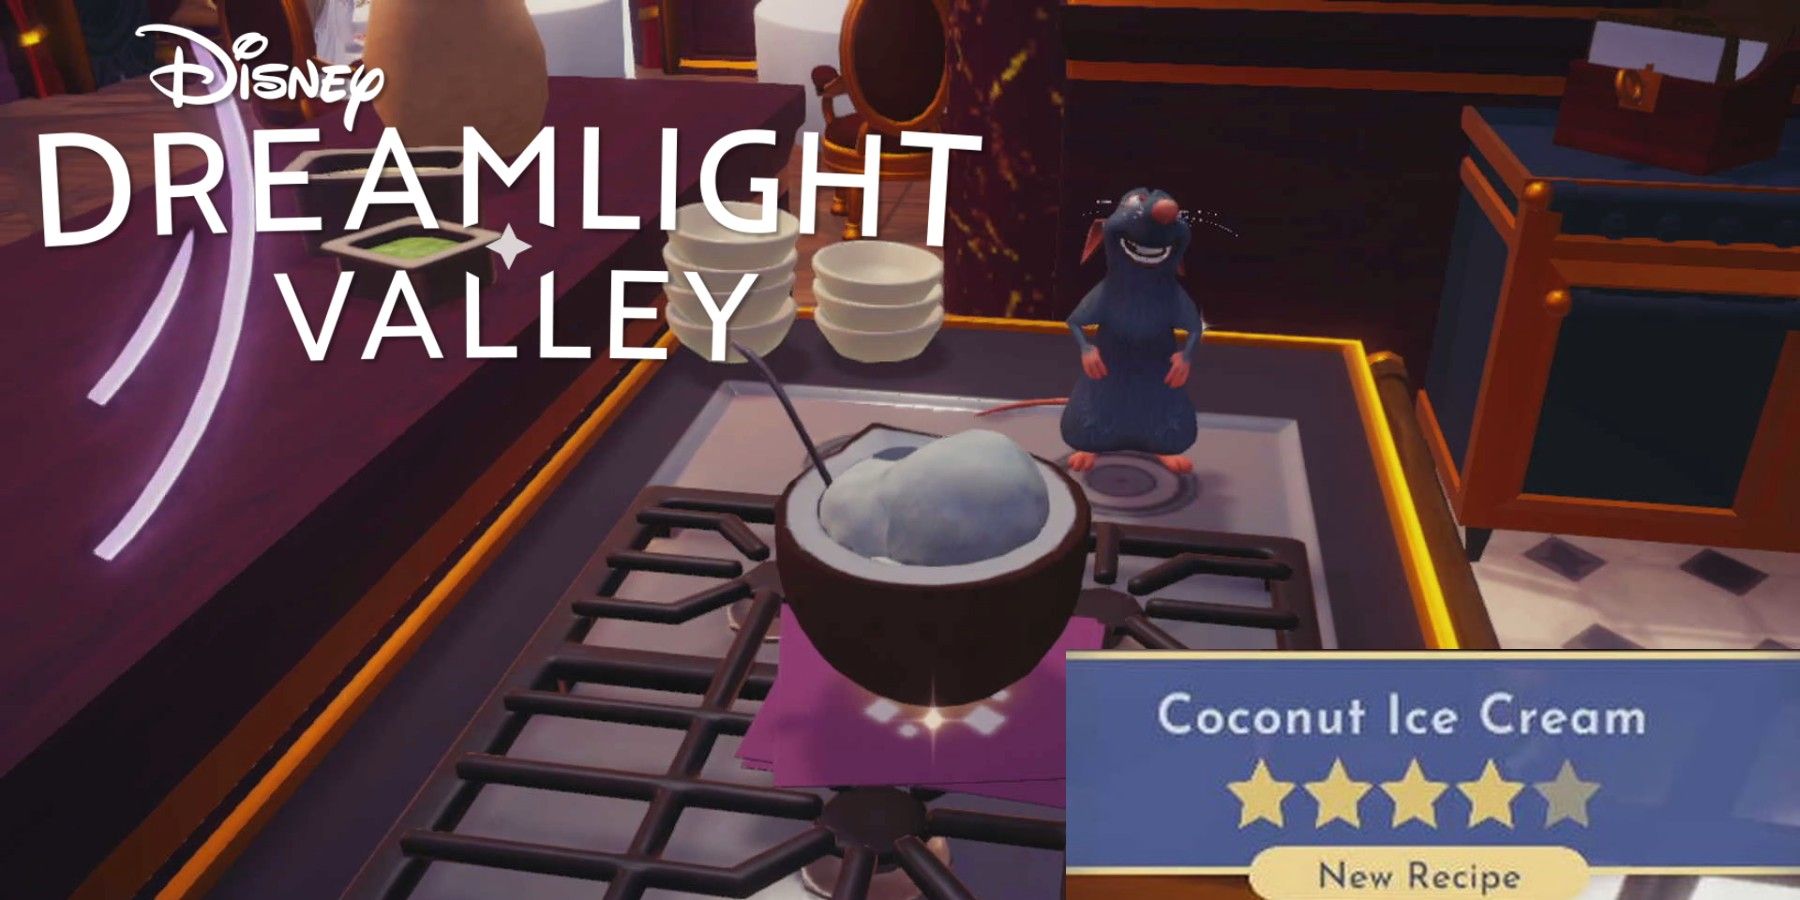 disney dreamlight valley coconut ice cream and logo